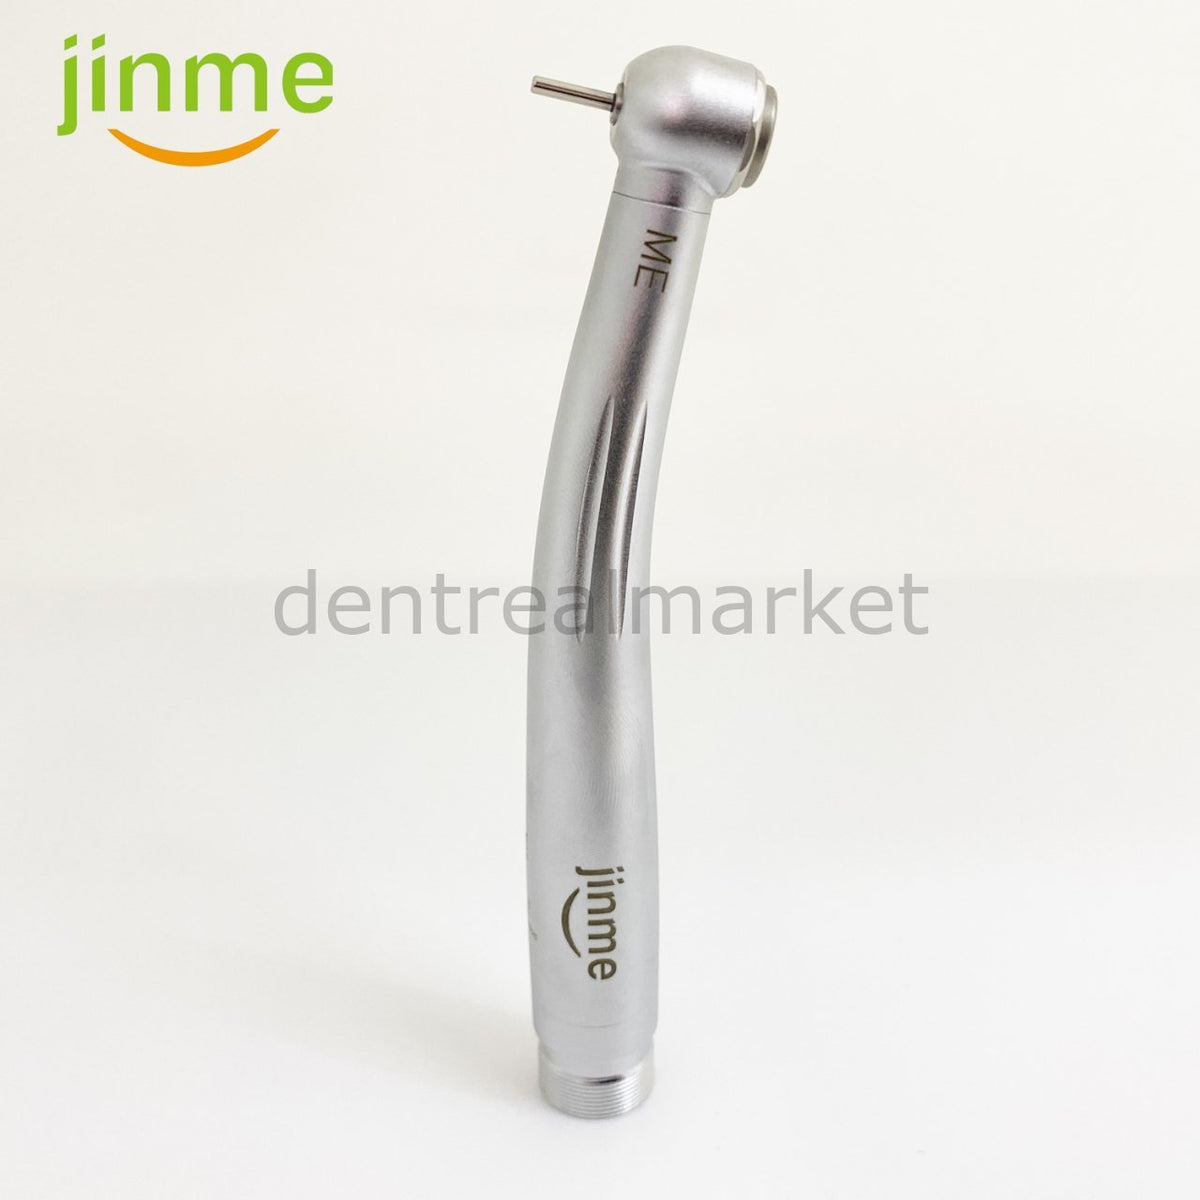 DentrealStore - Dentreal Drm High Speed Dental Air Turbine - ME-TU - 4 Hole - Lightless Turbine